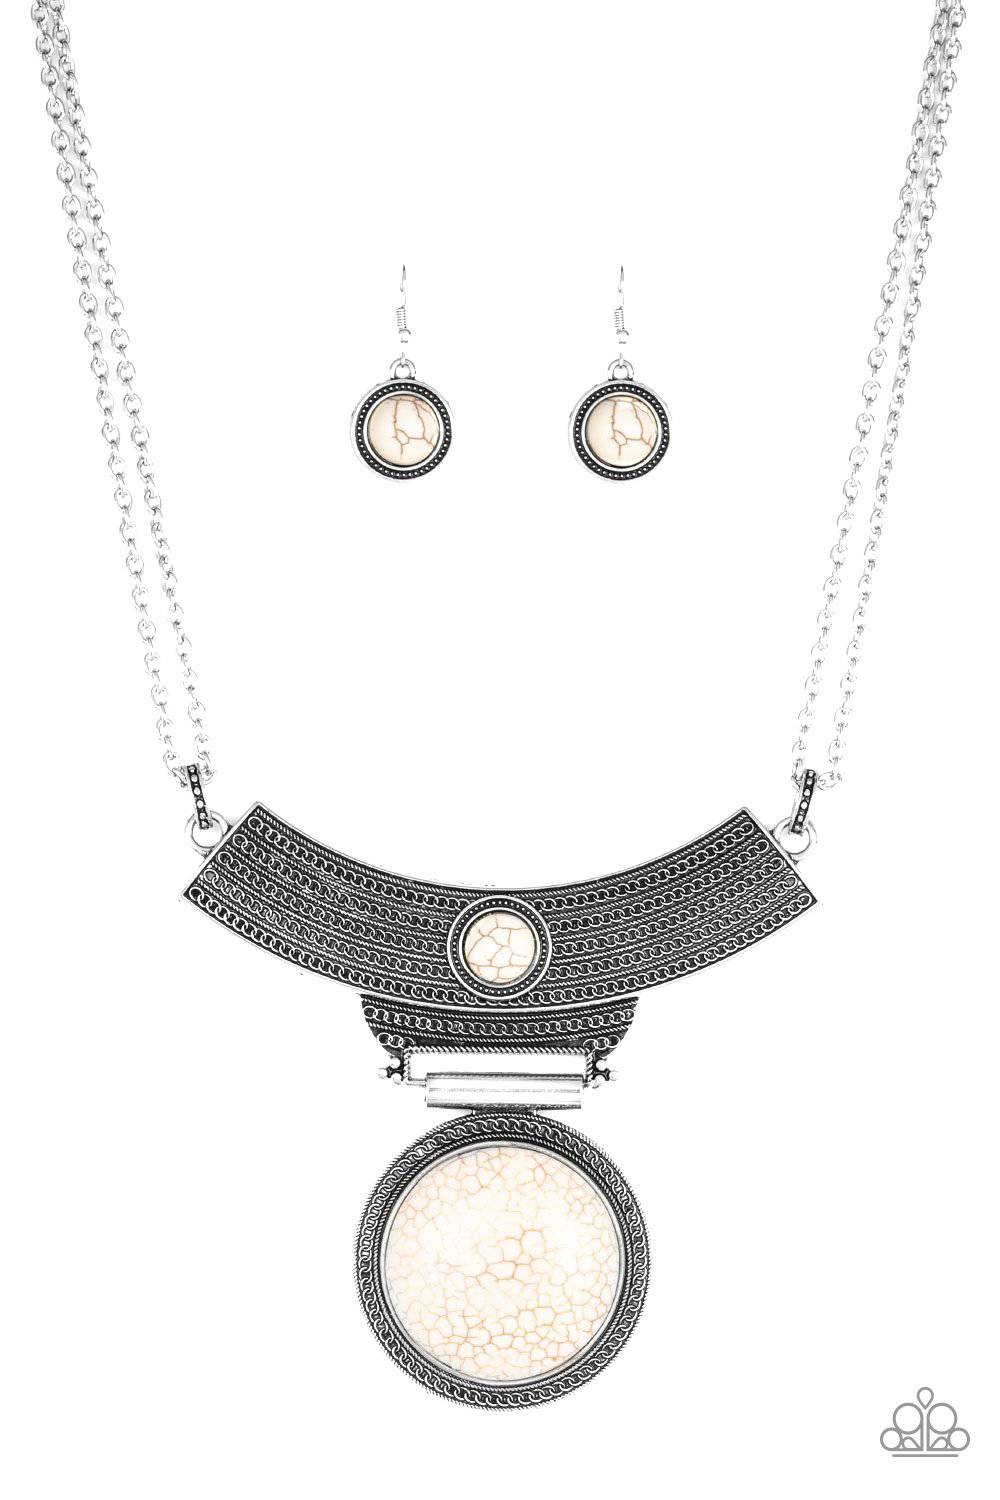 Lasting EMPRESS-ions - White Stone Necklace - Paparazzi Accessories - GlaMarous Titi Jewels